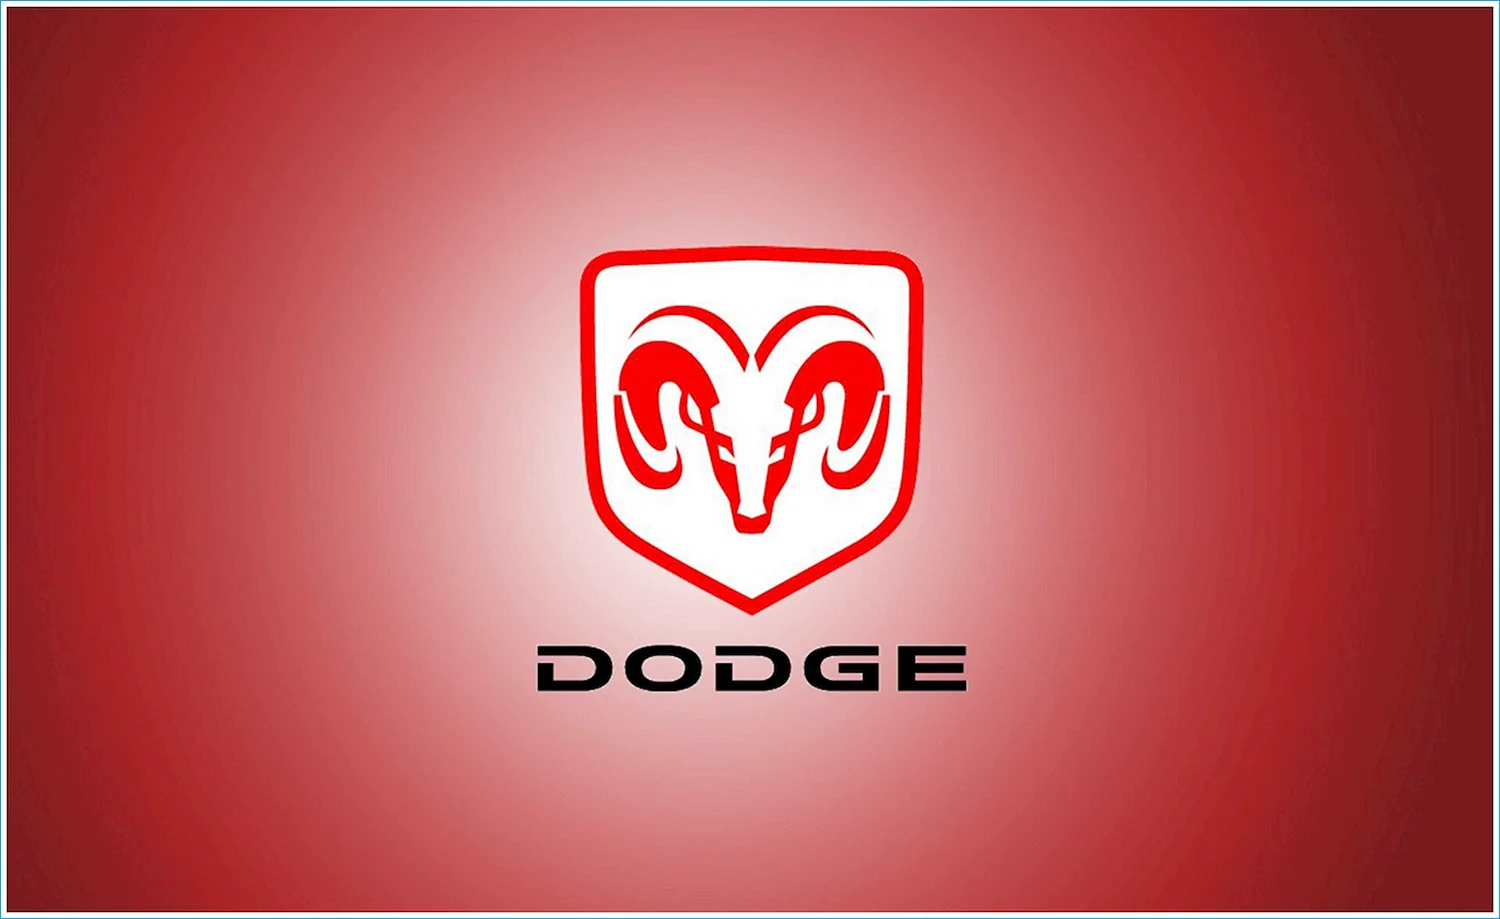 Логотип Додж 2020